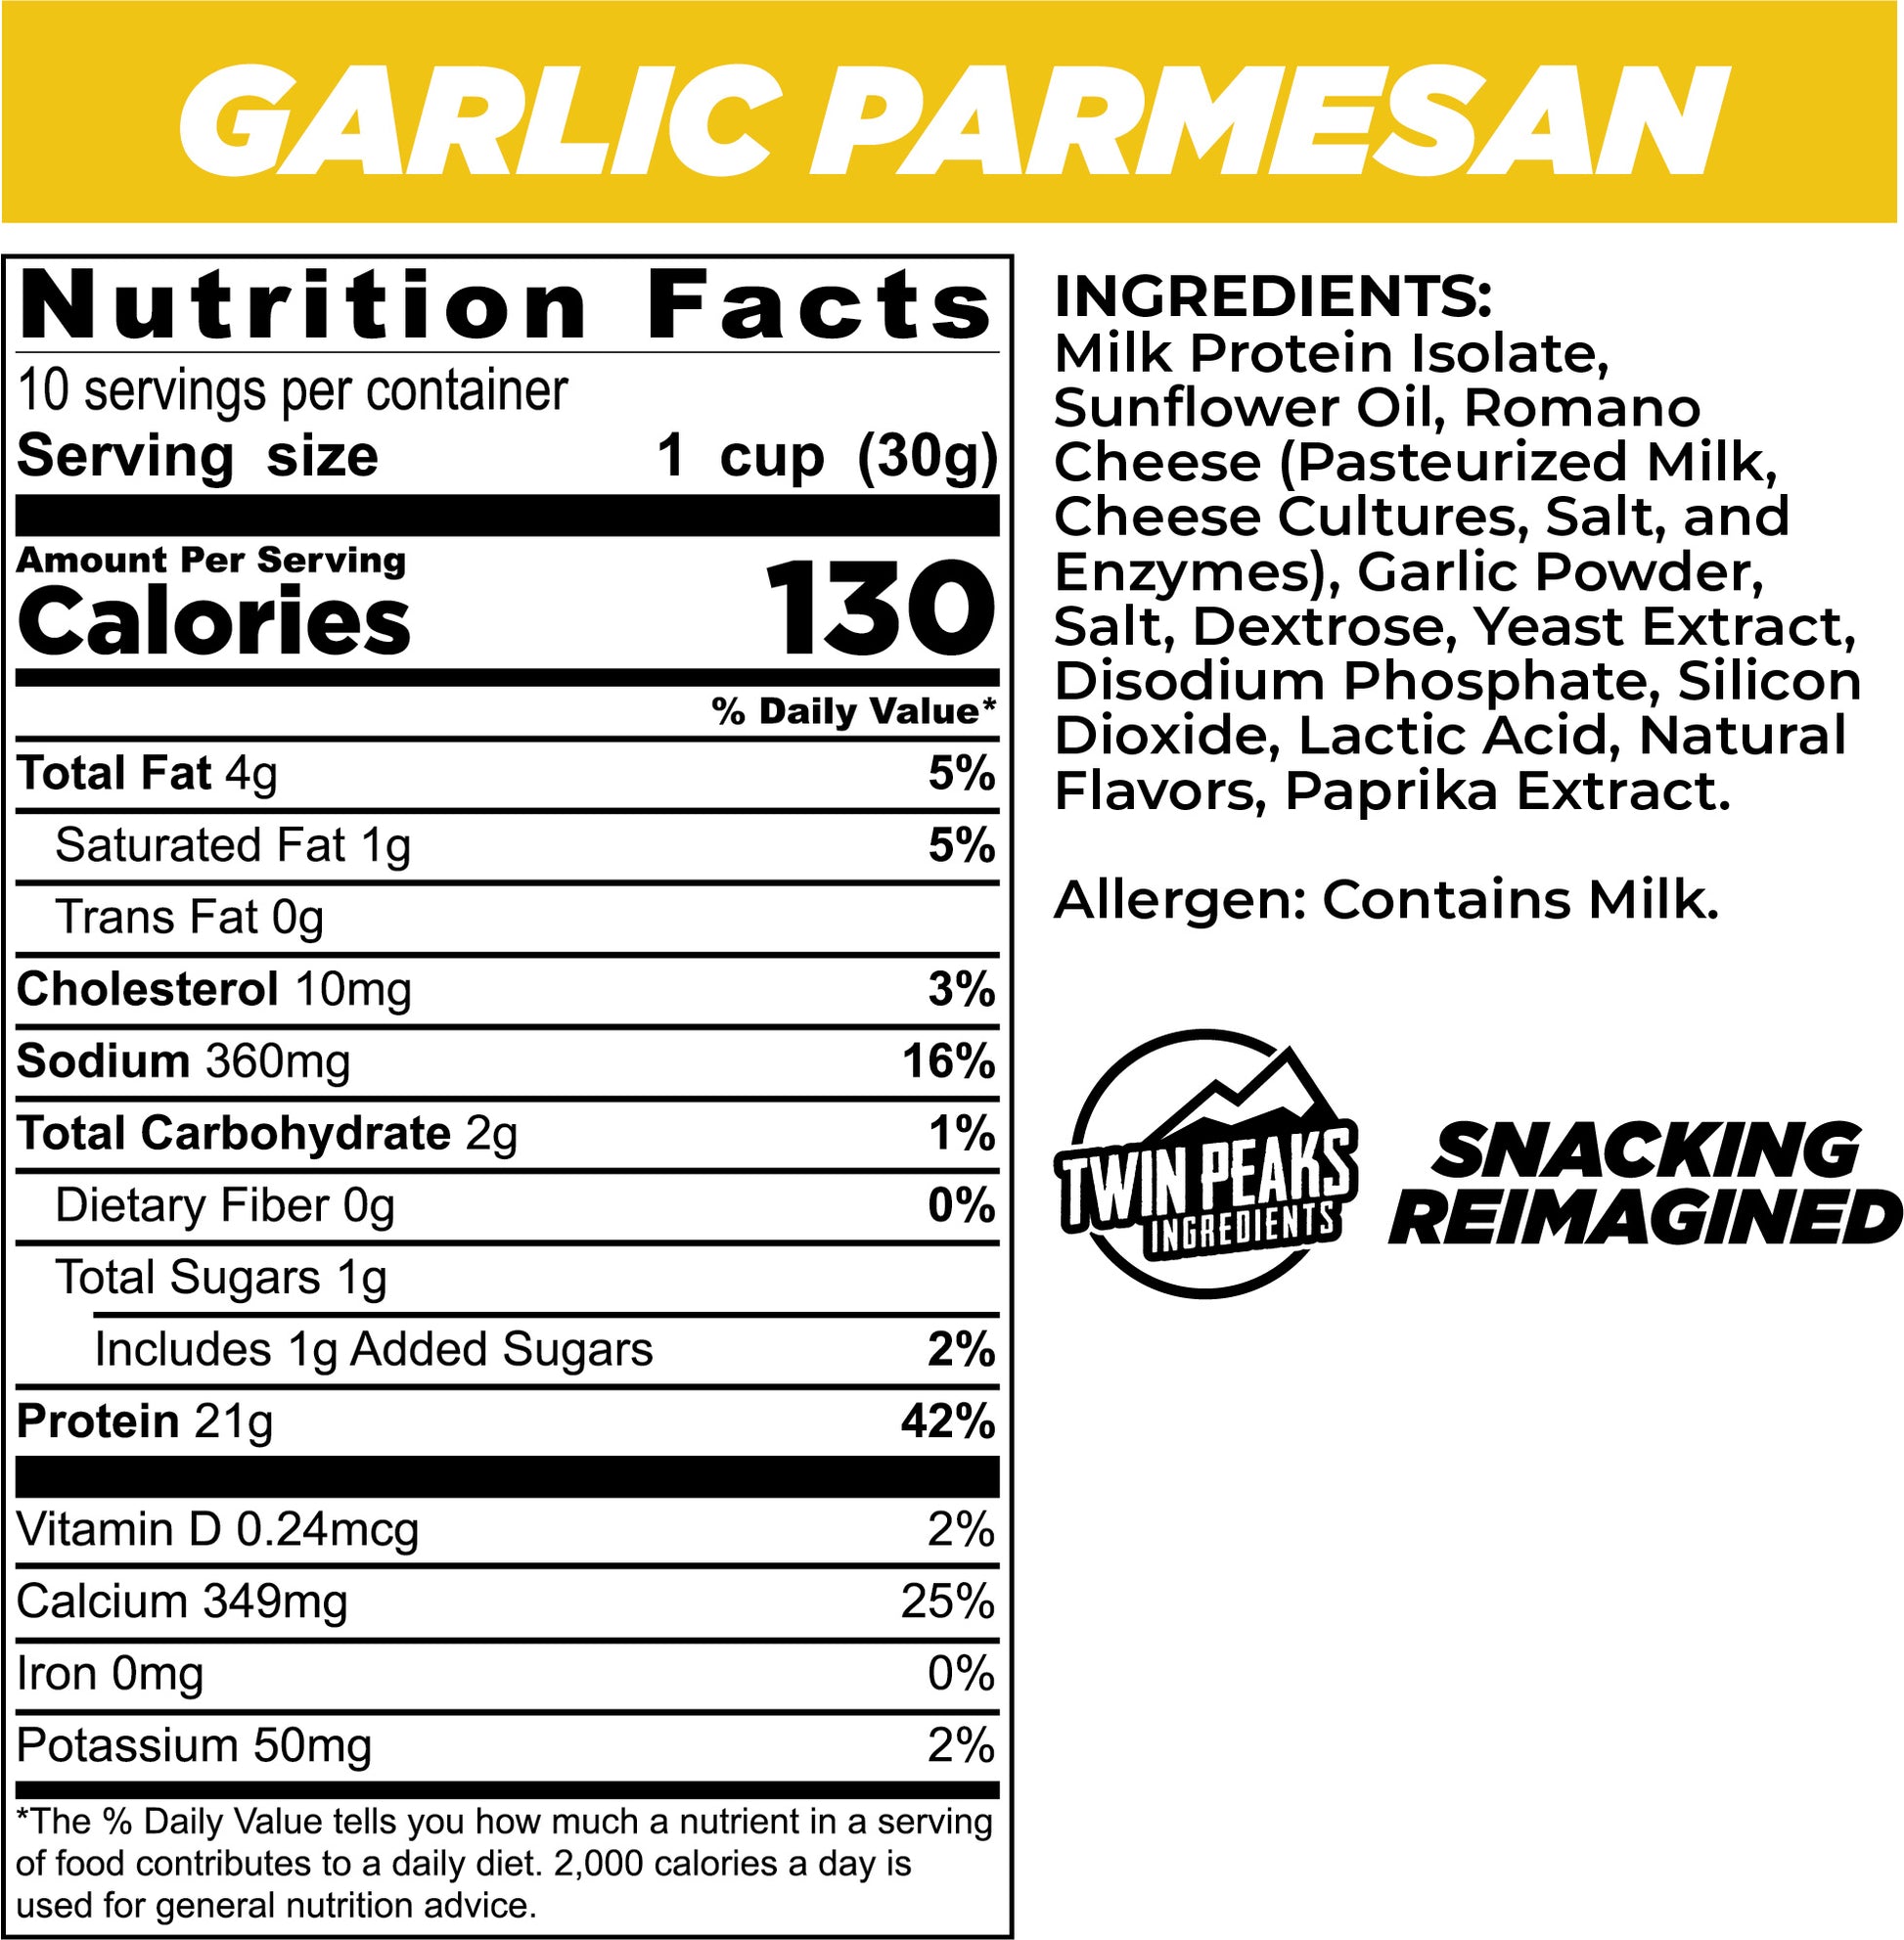 Garlic Parmesan puffs